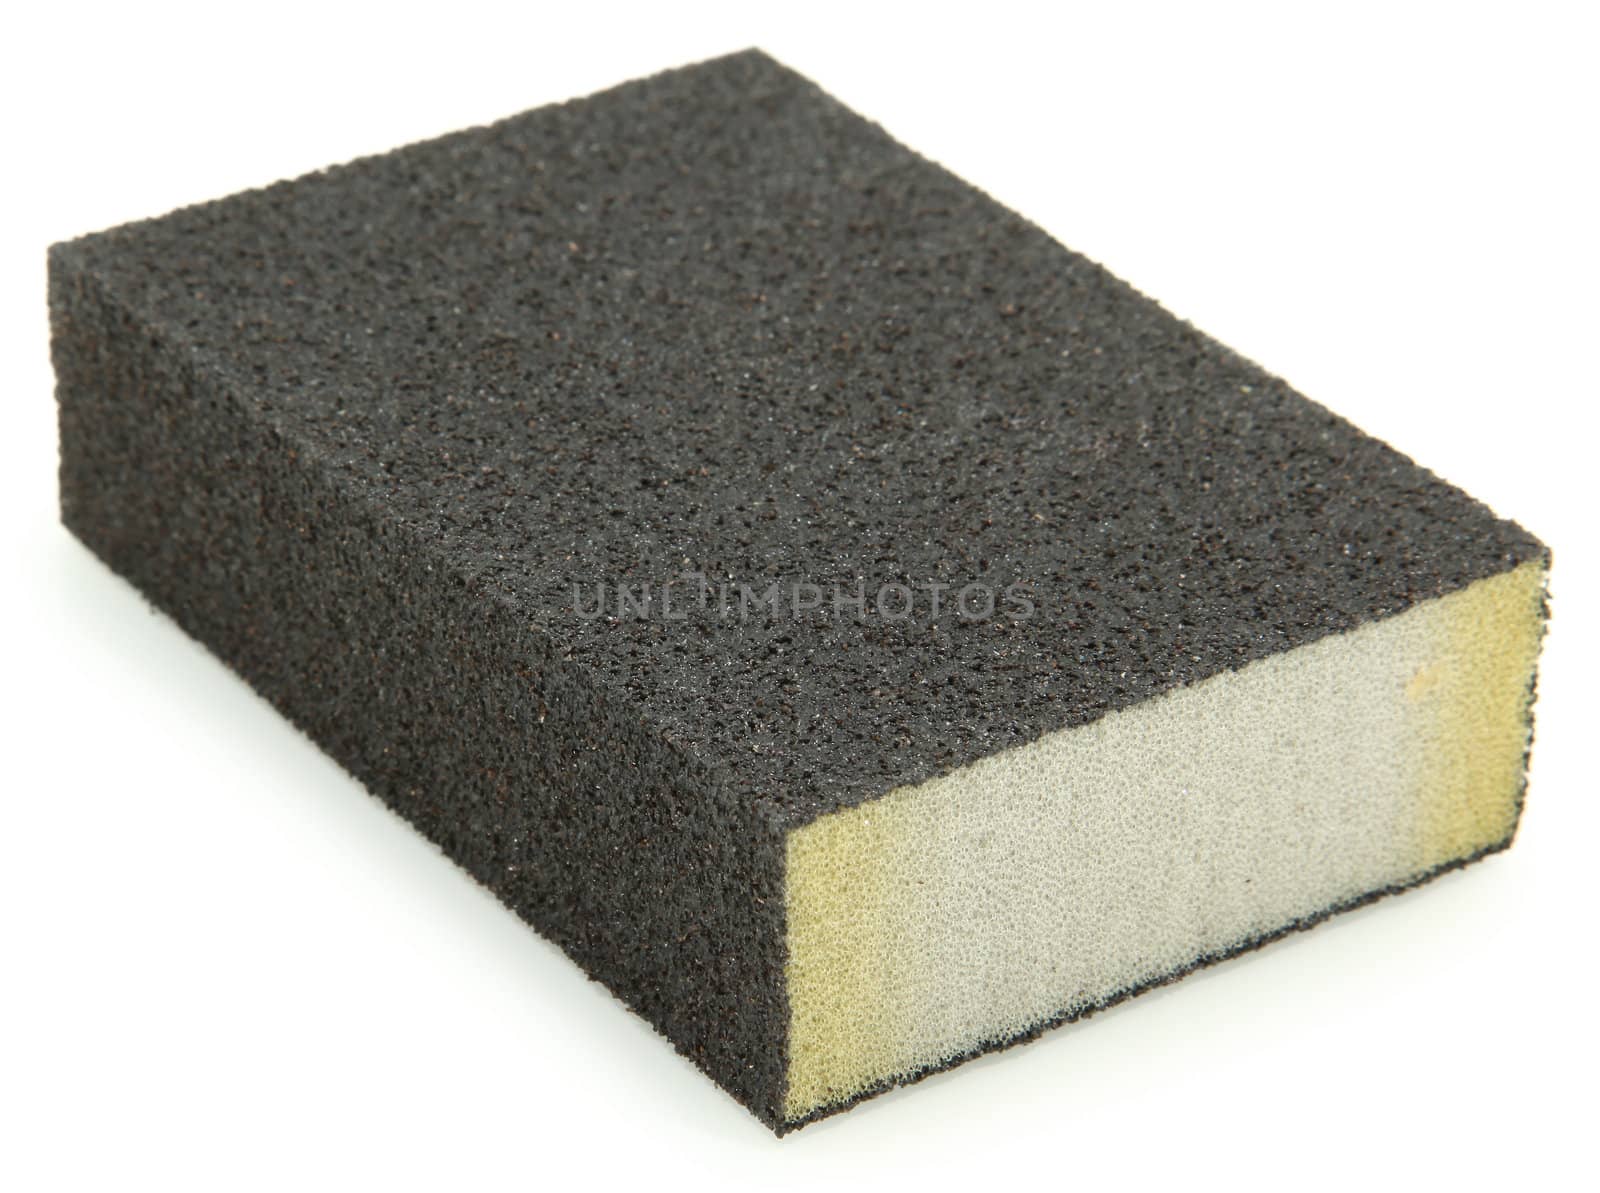 Sanding Sponge Block by duplass